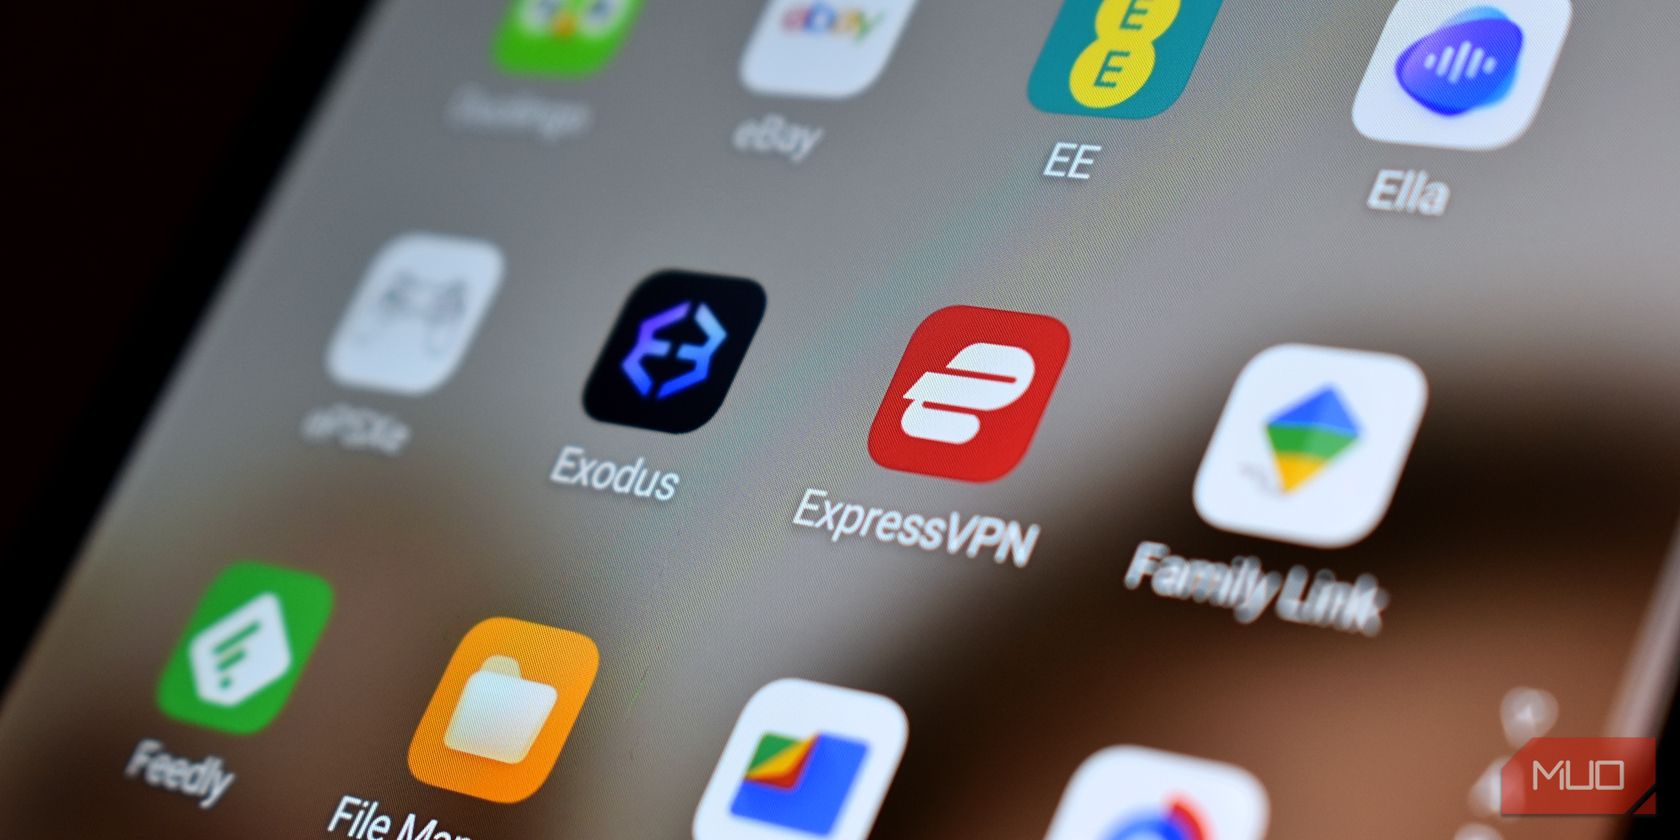 expressvpn logo on smartphone screen